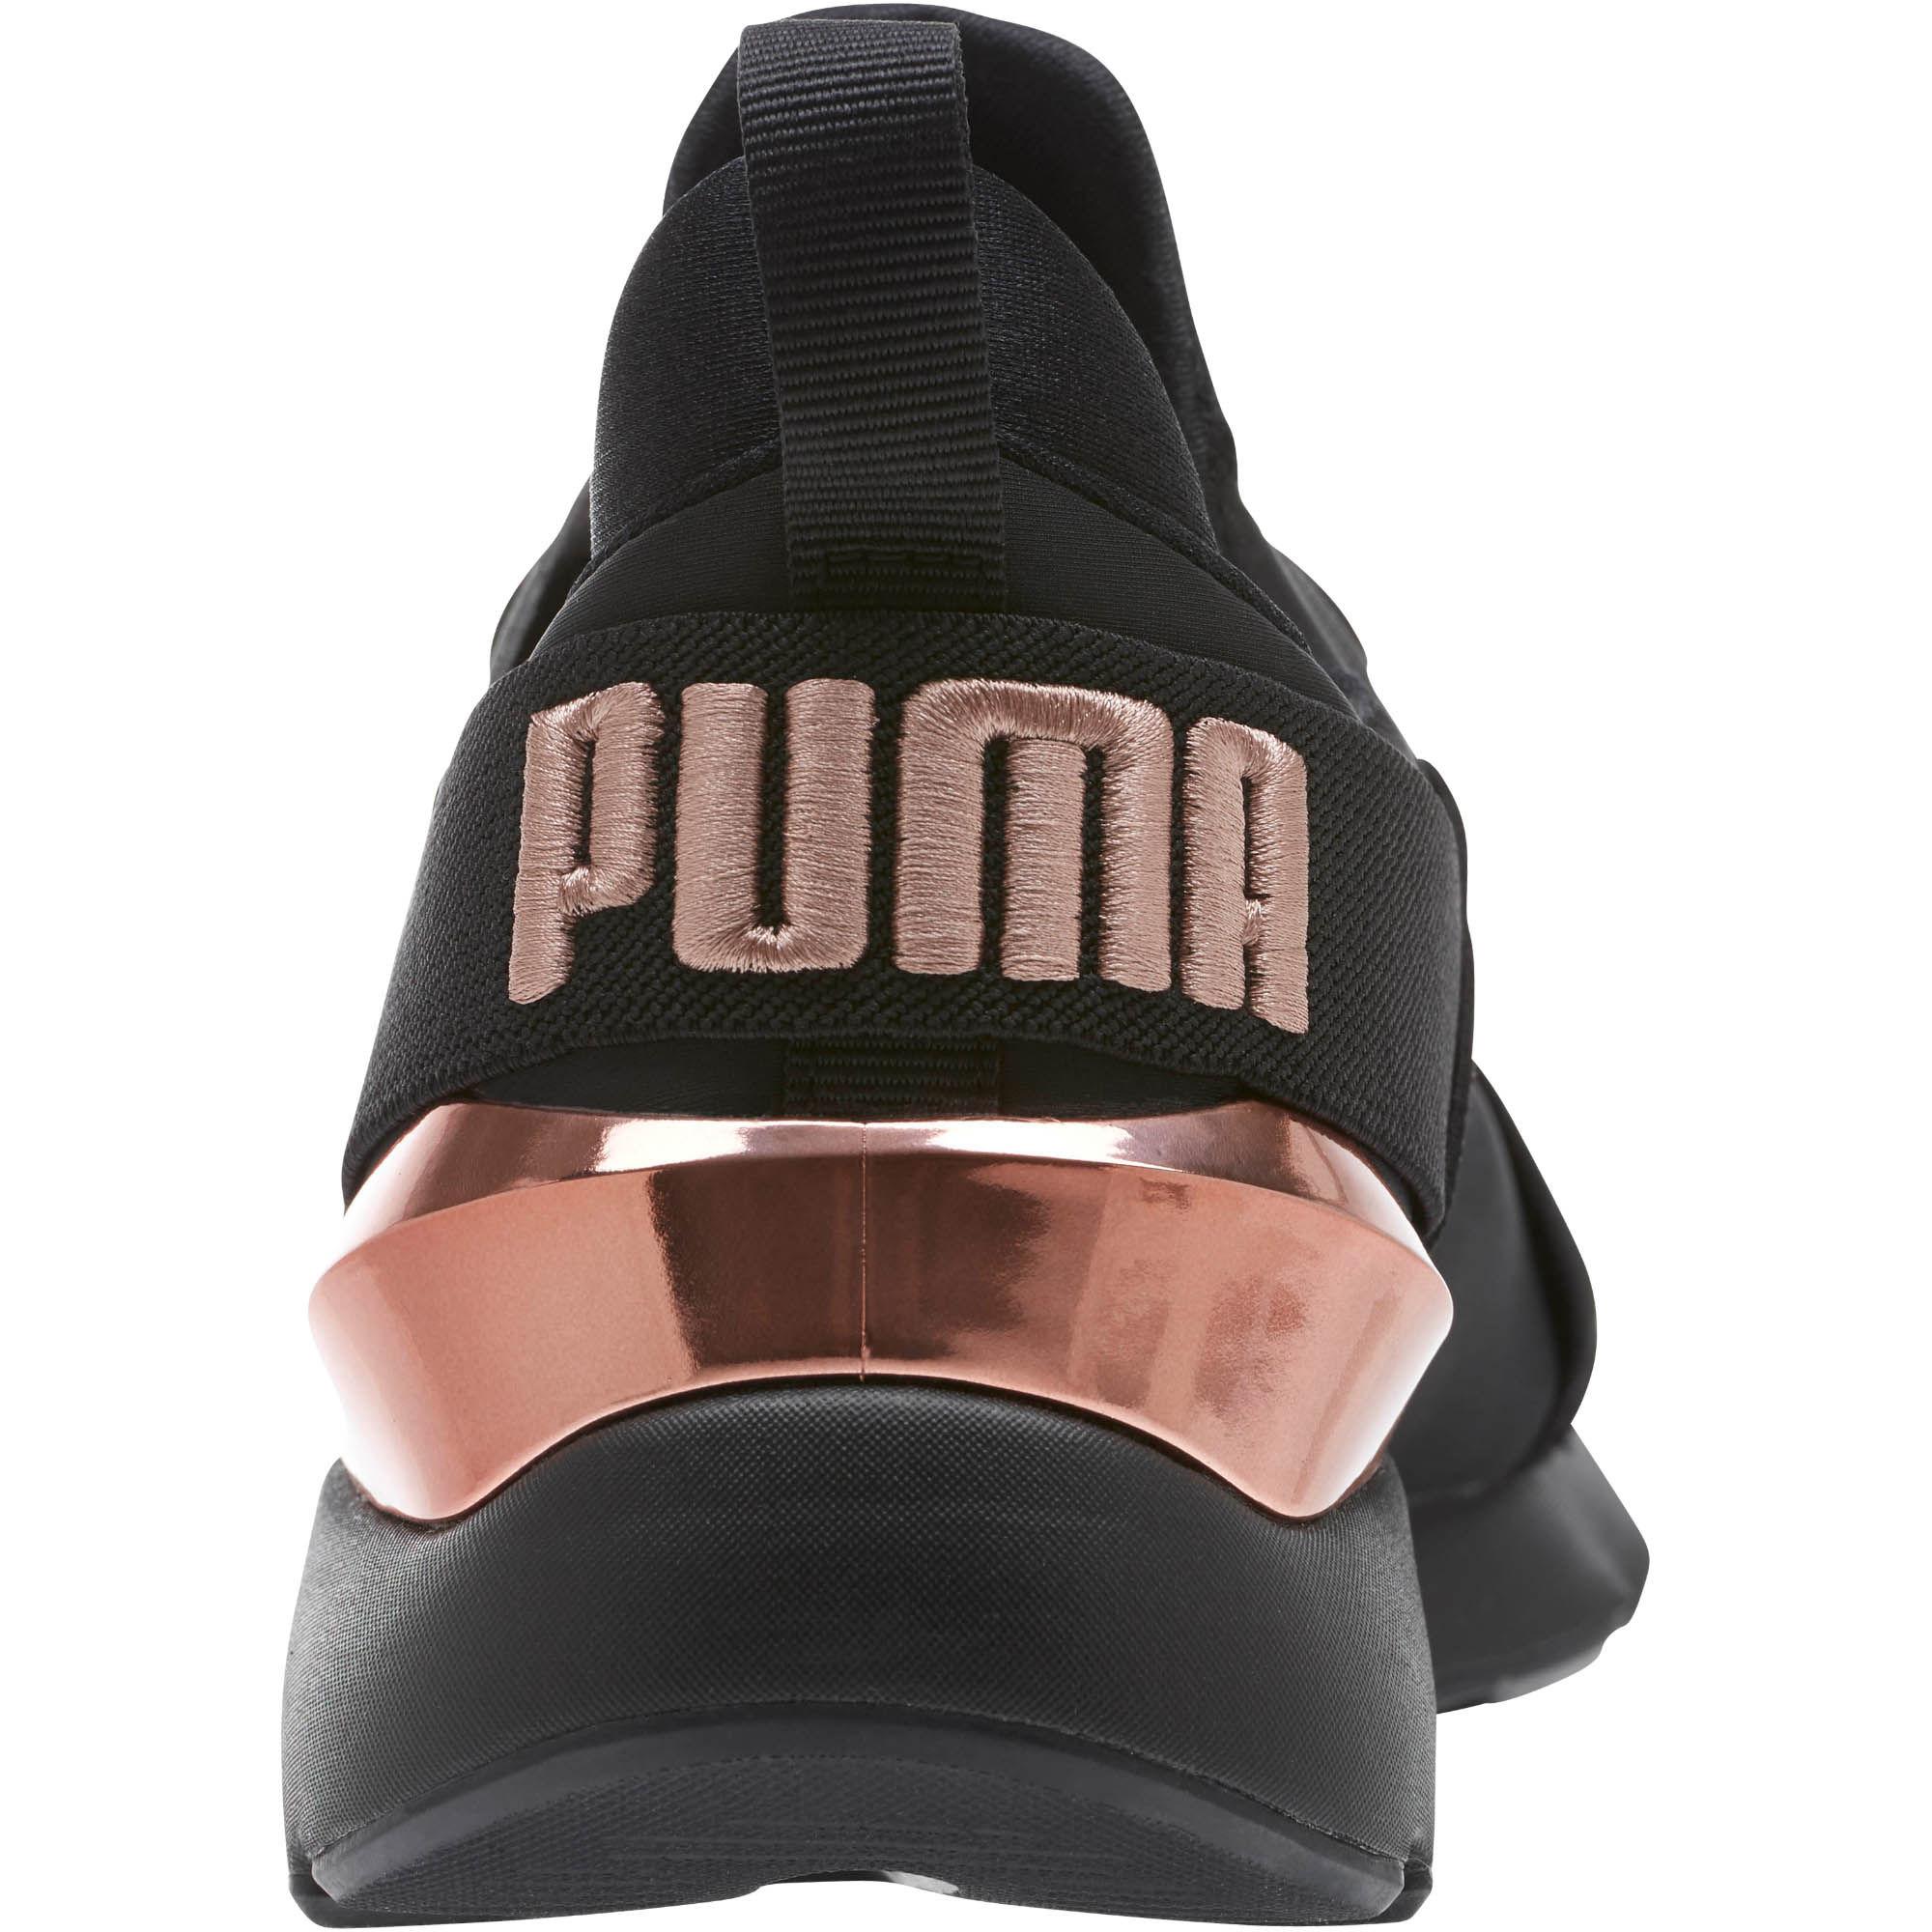 Lyst - Puma Muse Metal Women's Sneakers in Black